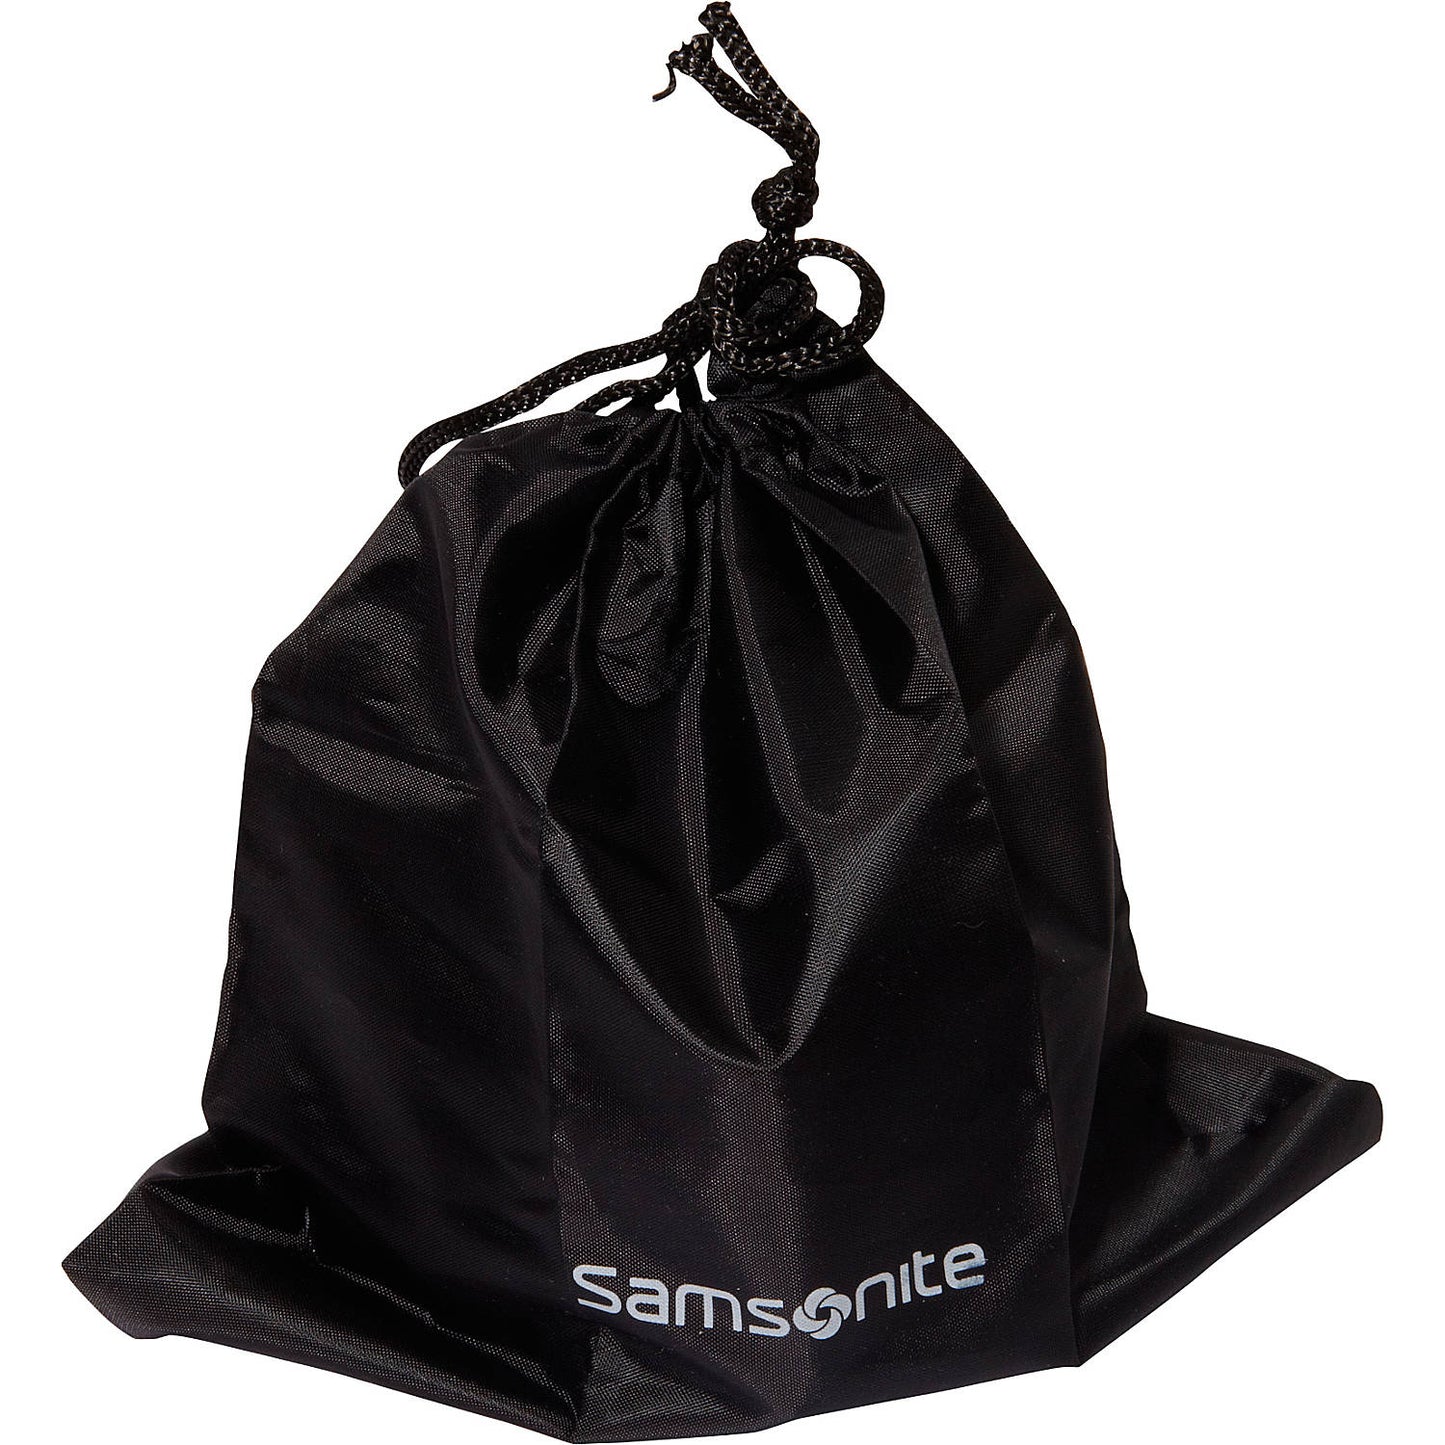 Samsonite Worldwide Converter/Adapter Plug Kit w/pouch